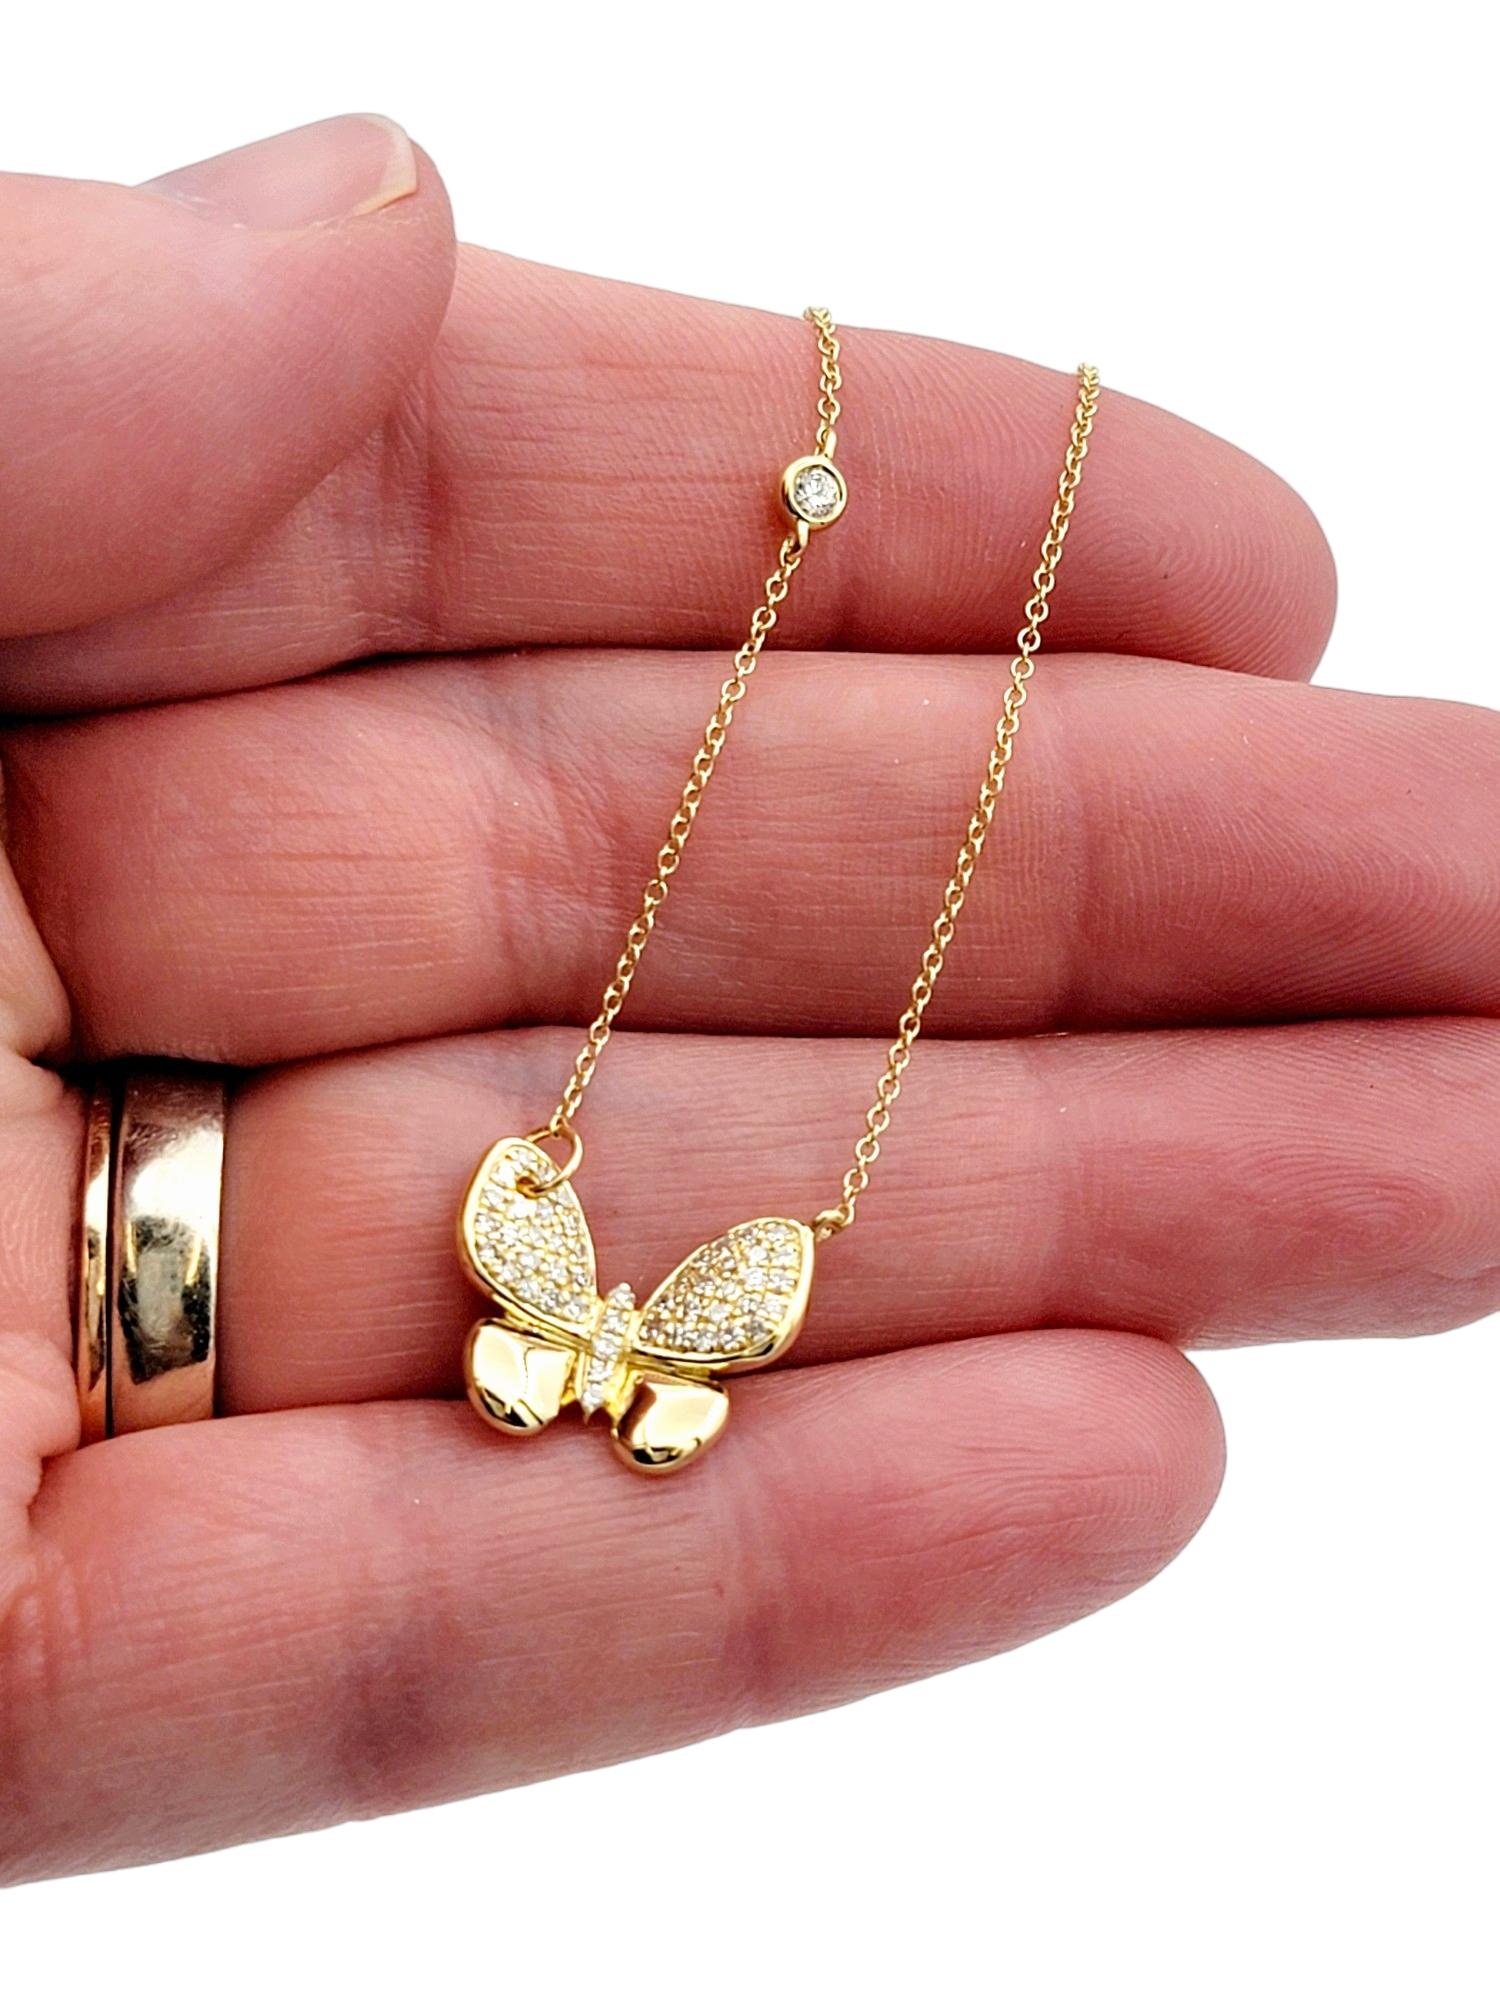 Effy Pavé Diamond Butterfly Pendant Necklace Set in 14 Karat Yellow Gold For Sale 2